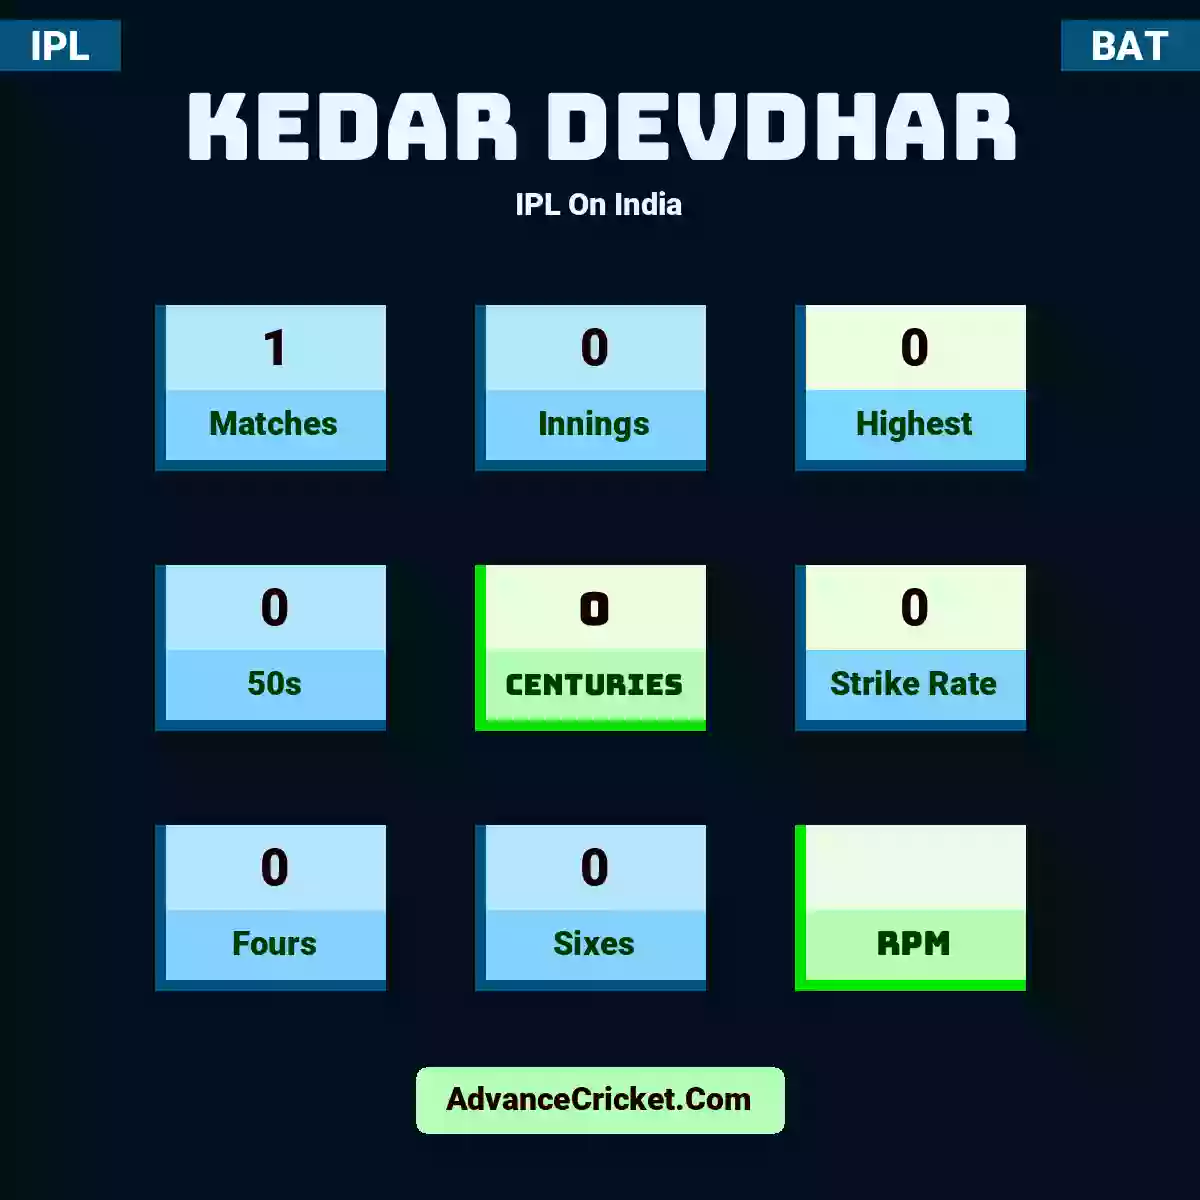 Kedar Devdhar IPL  On India, Kedar Devdhar played 1 matches, scored 0 runs as highest, 0 half-centuries, and 0 centuries, with a strike rate of 0. K.Devdhar hit 0 fours and 0 sixes.